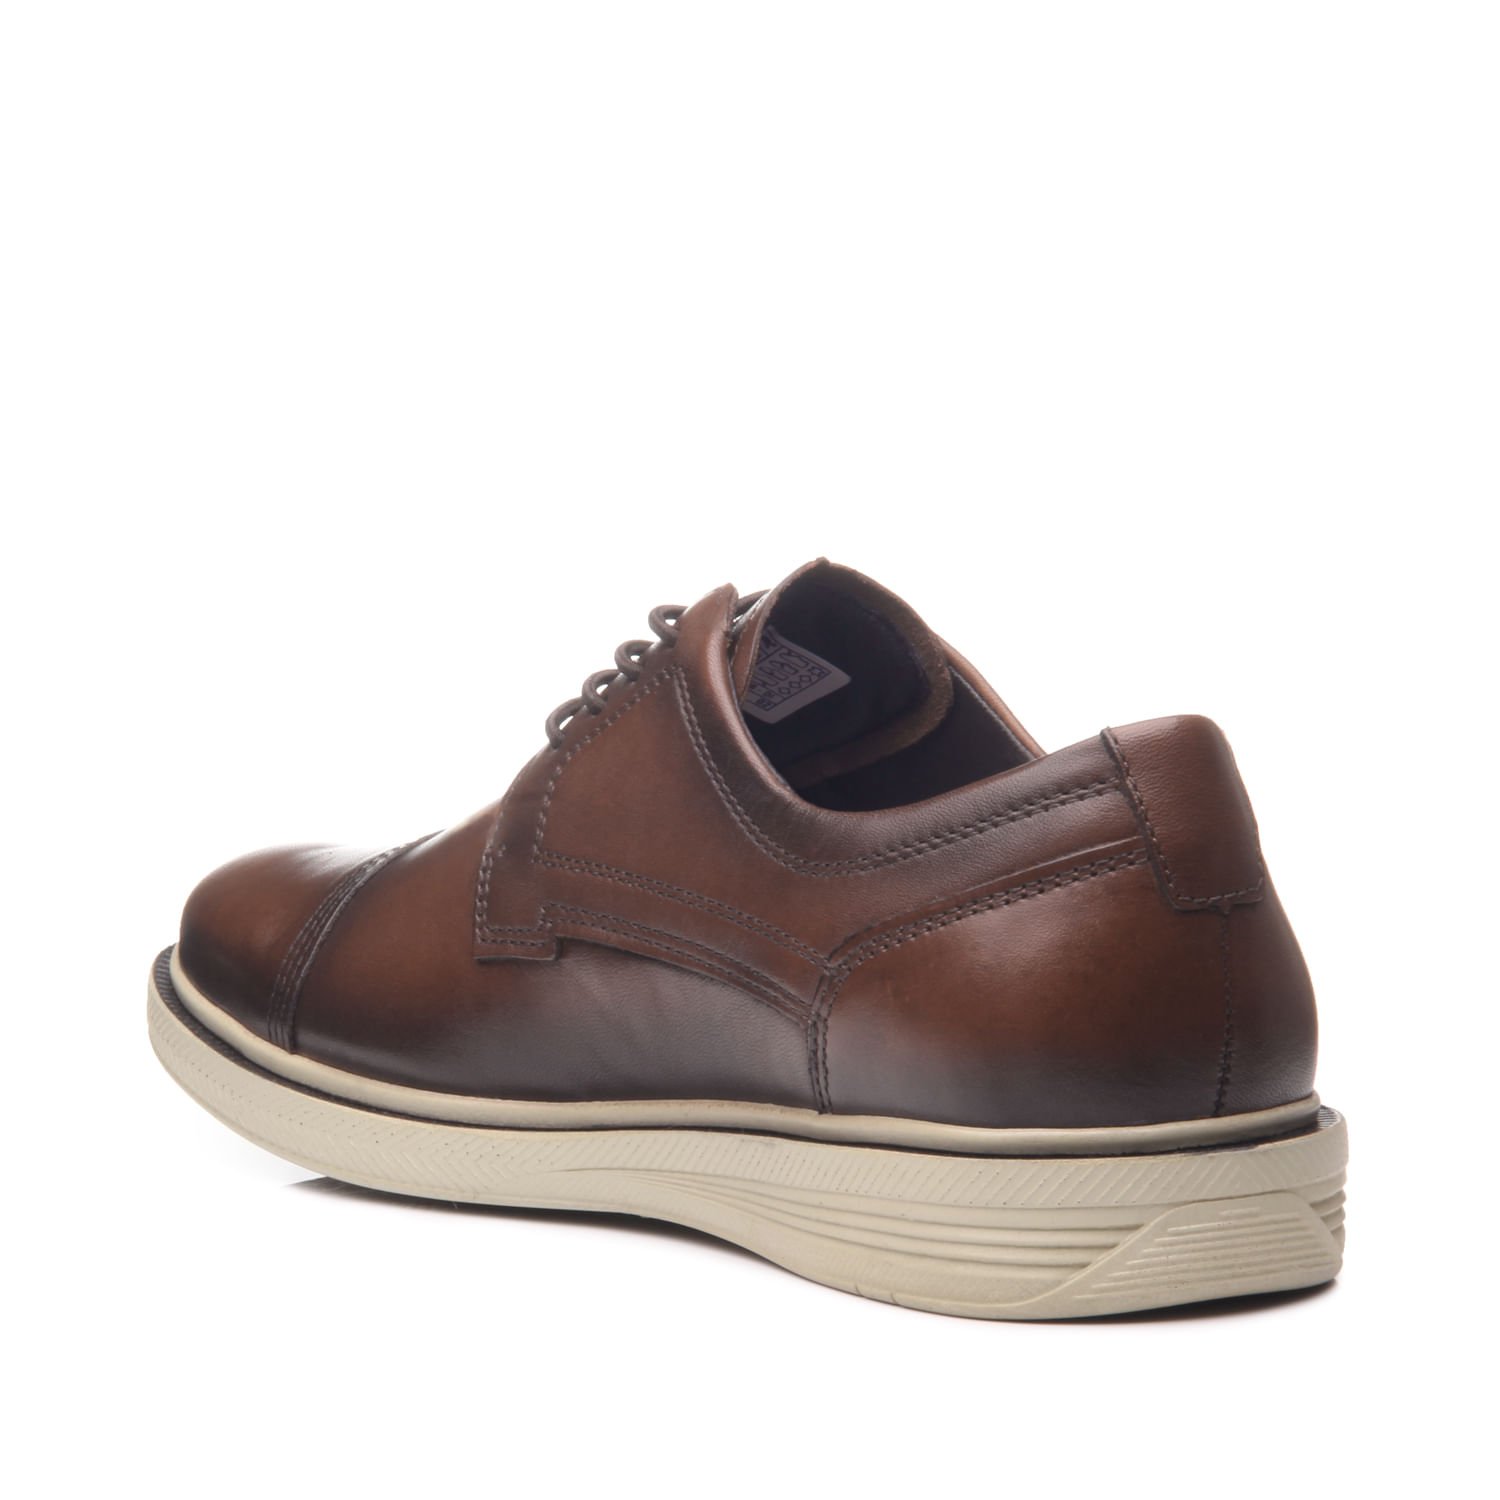 Sapato Casual Pegada Masculino em Couro Terracota 126108-03 Marrom 4